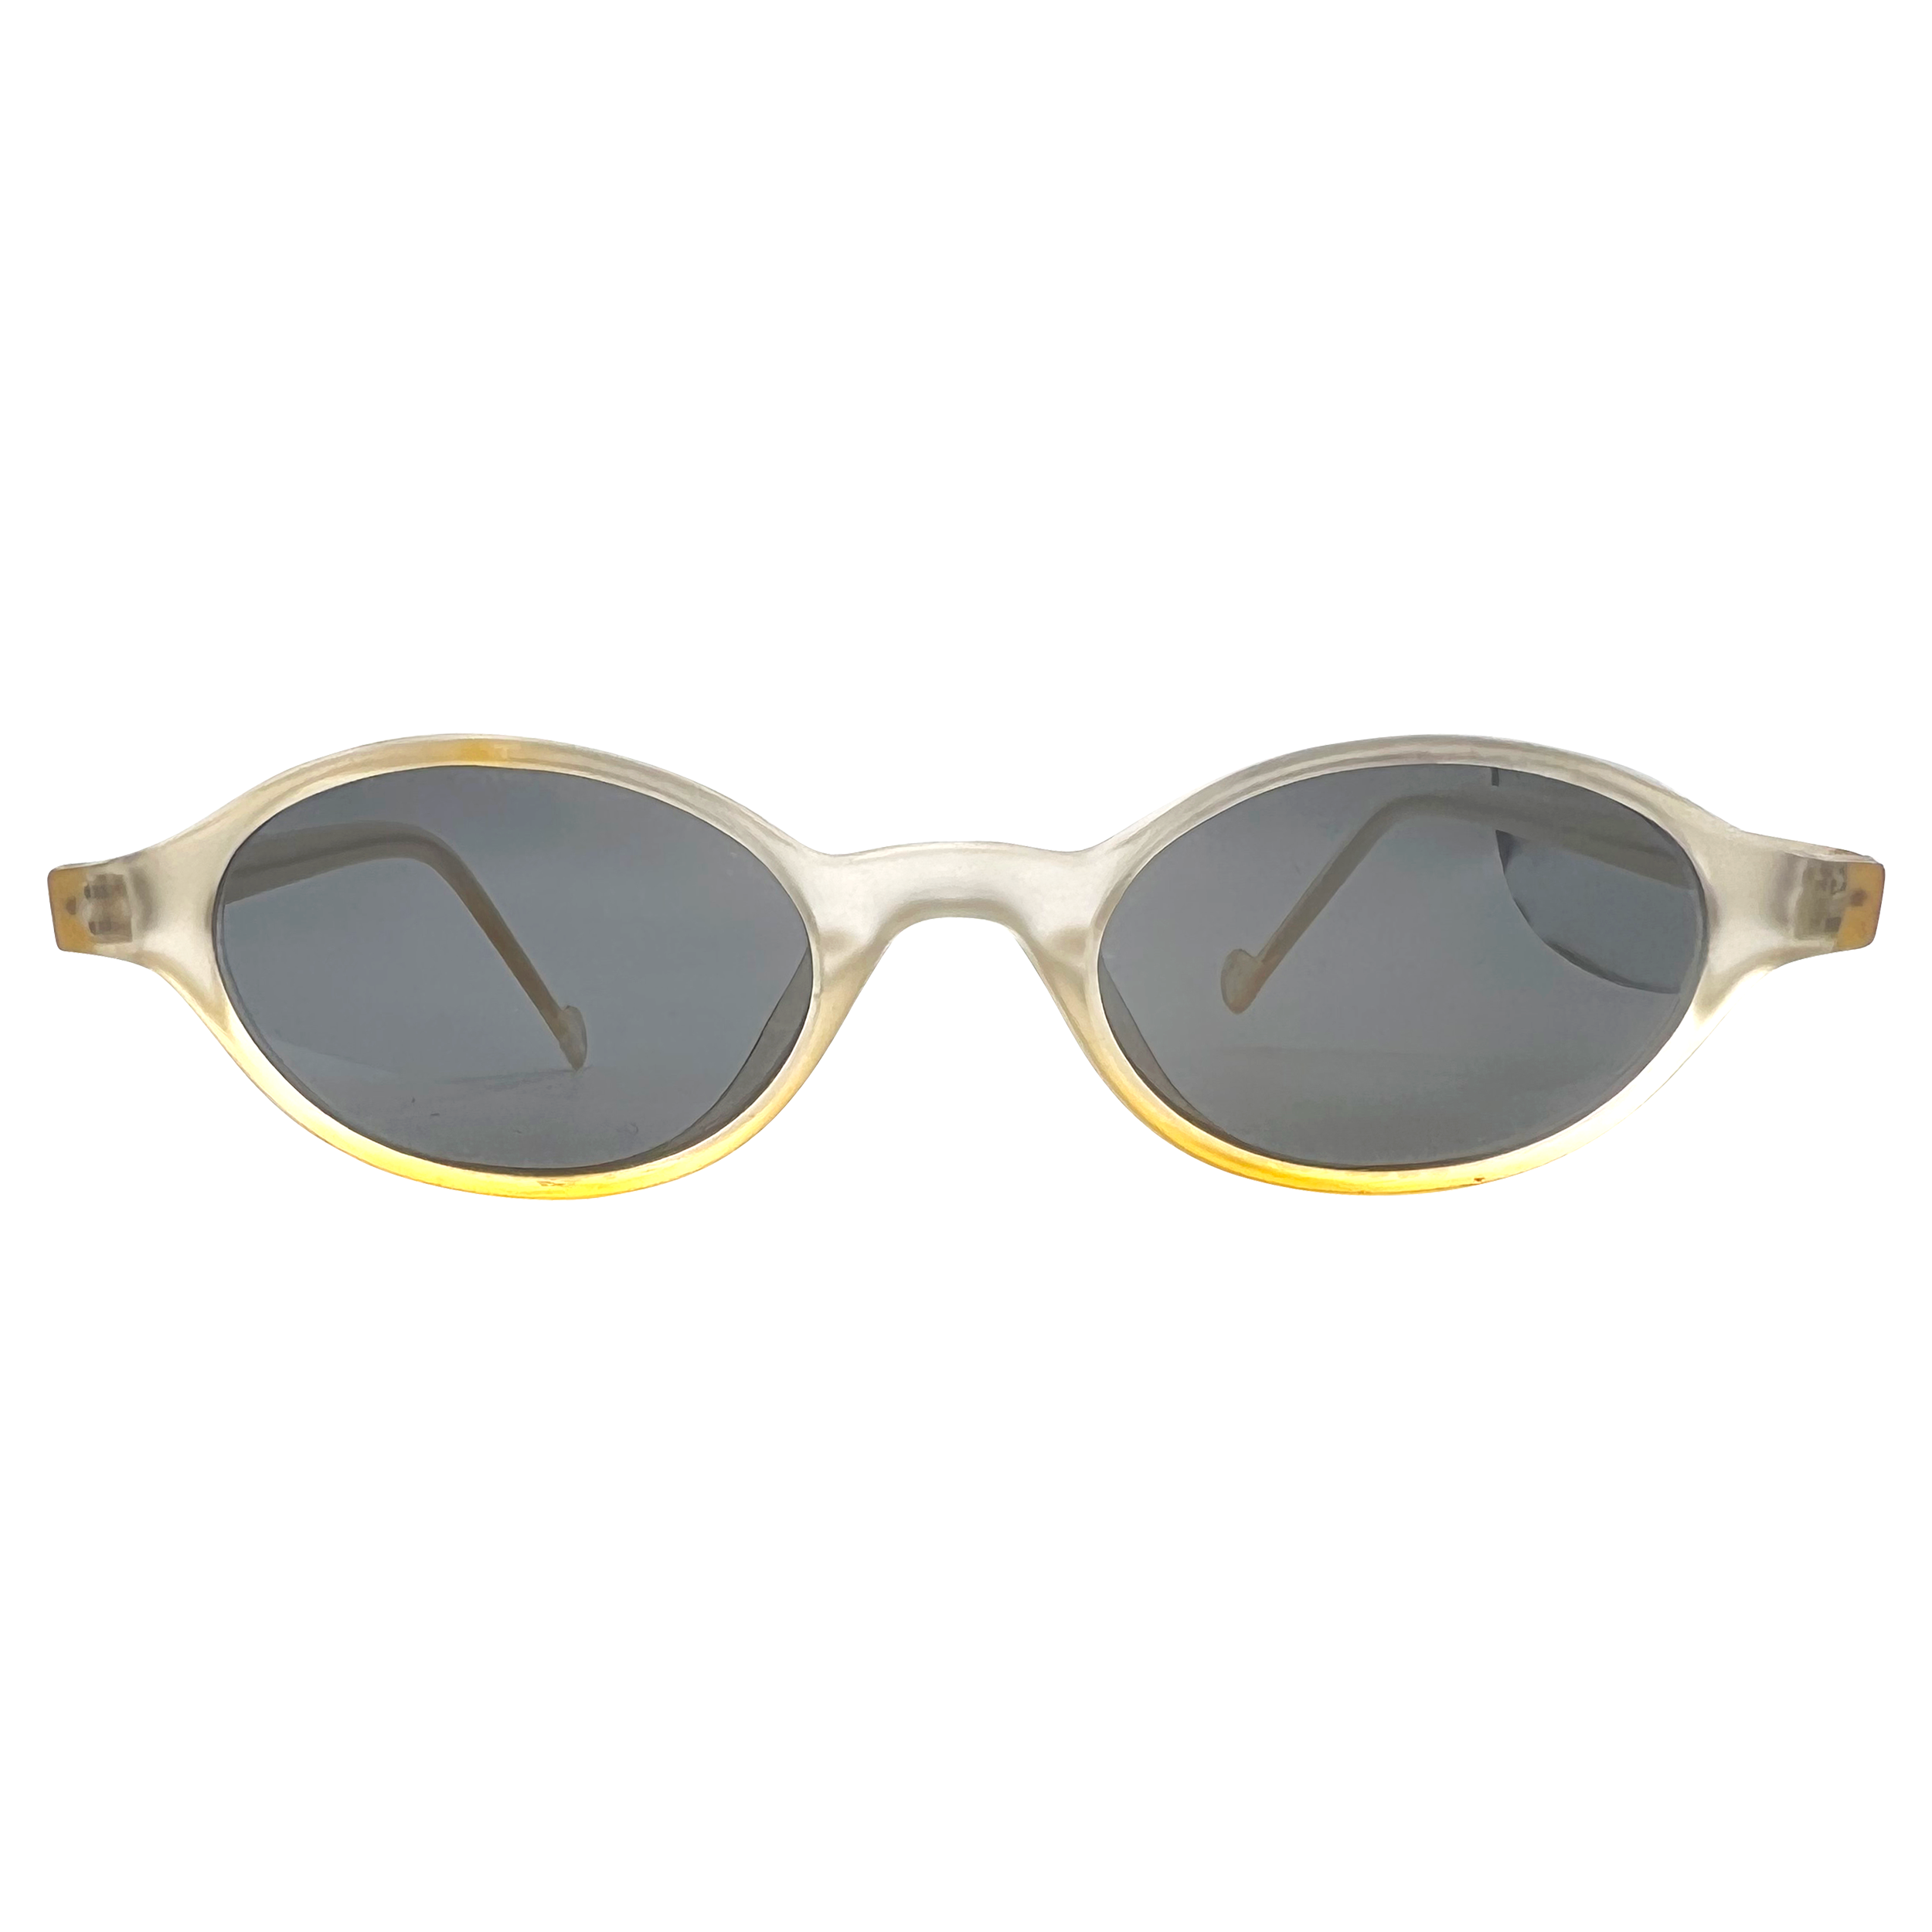 BITZ Frost Yellow/Super Dark Oval Sunglasses